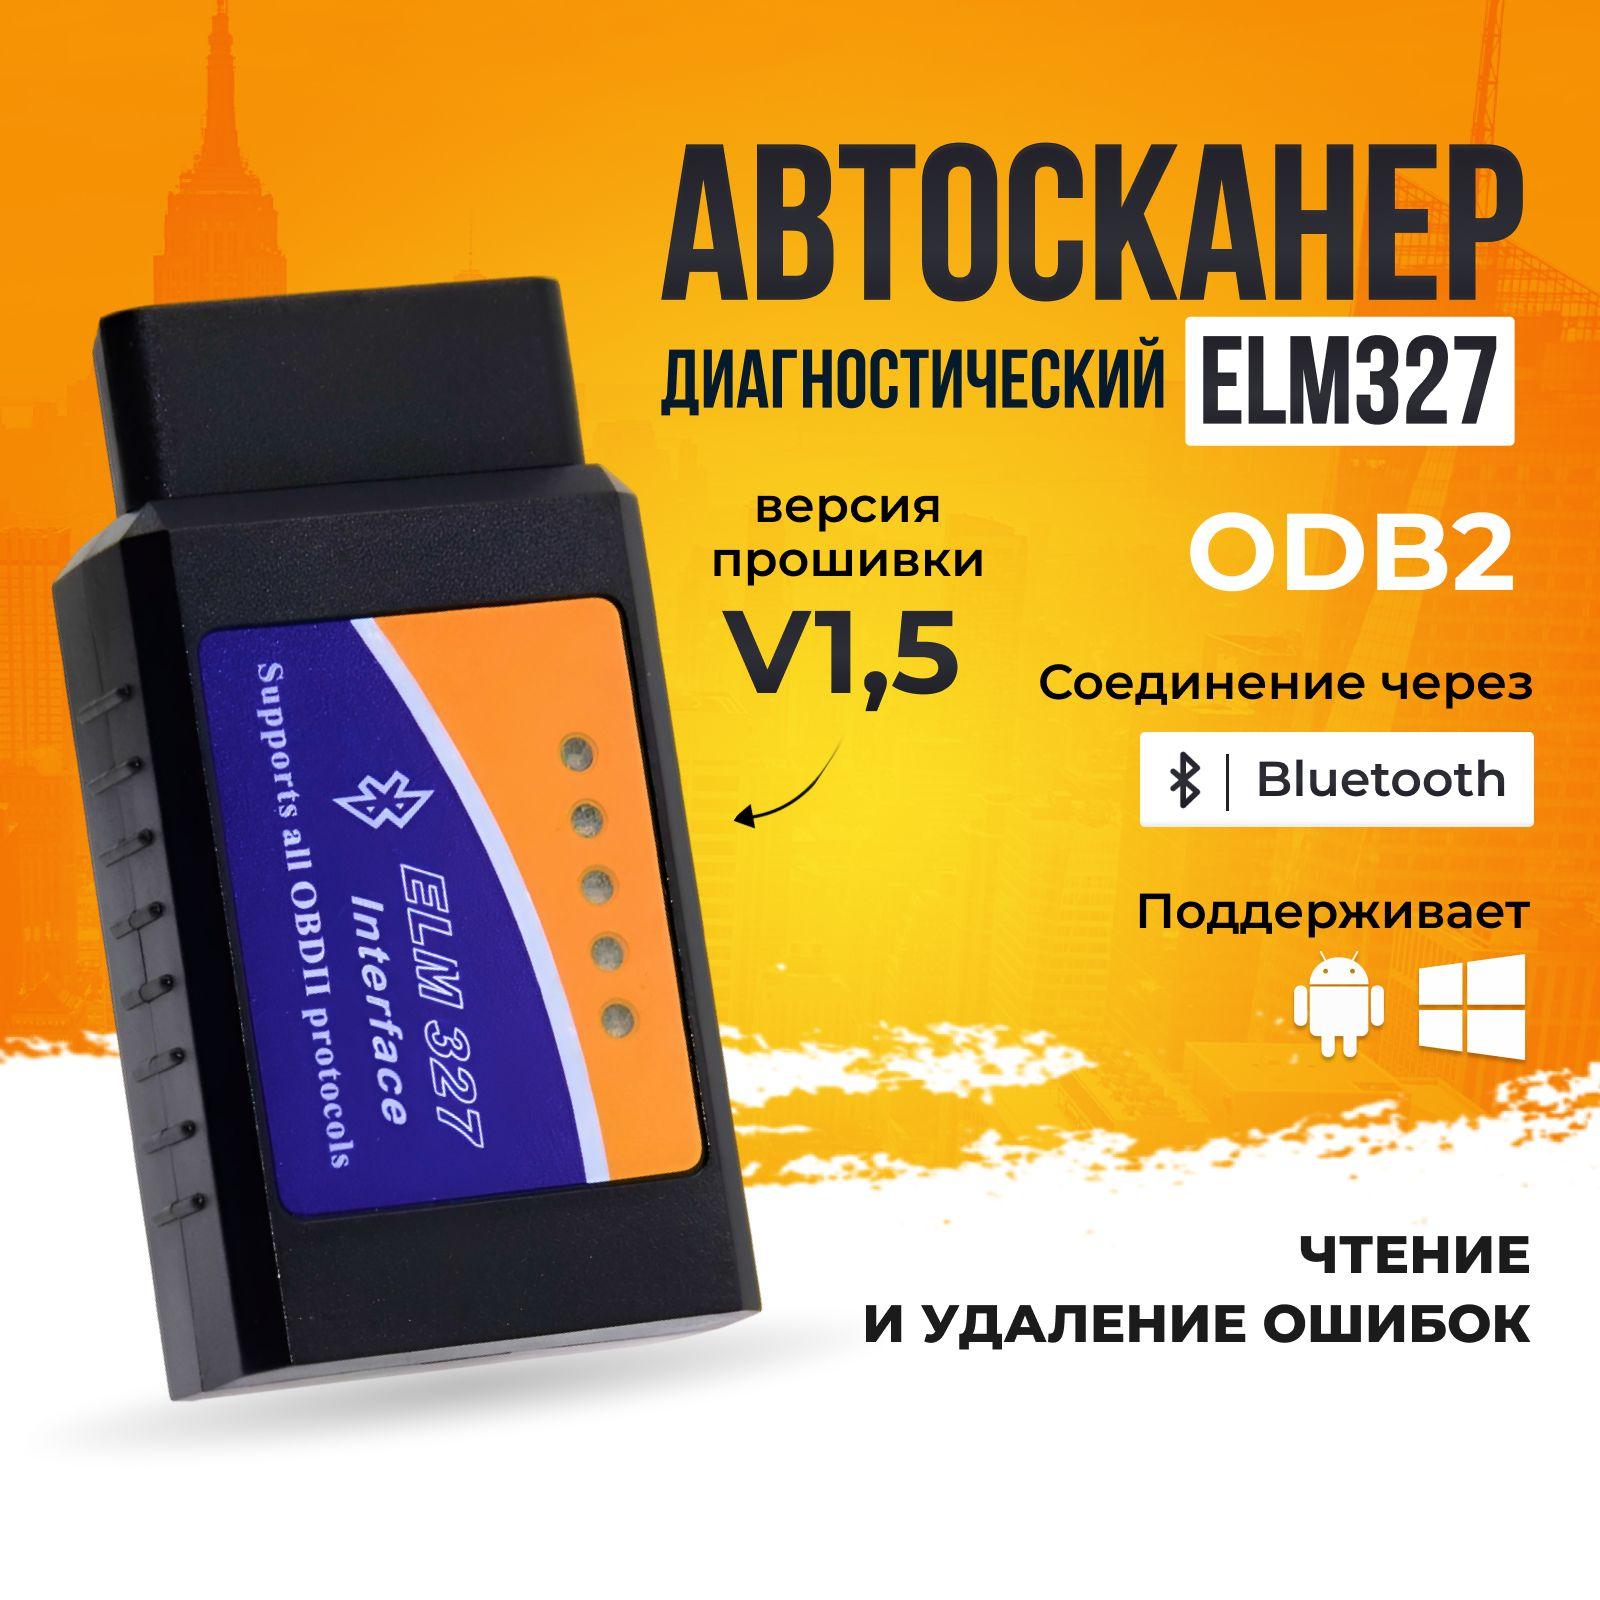 Сканер для диагностики автомобиля, OBD 2 ELM 327, Версия 1.5 Bluetooth 5.1, (ЕЛМ 327) PIC18F25K80